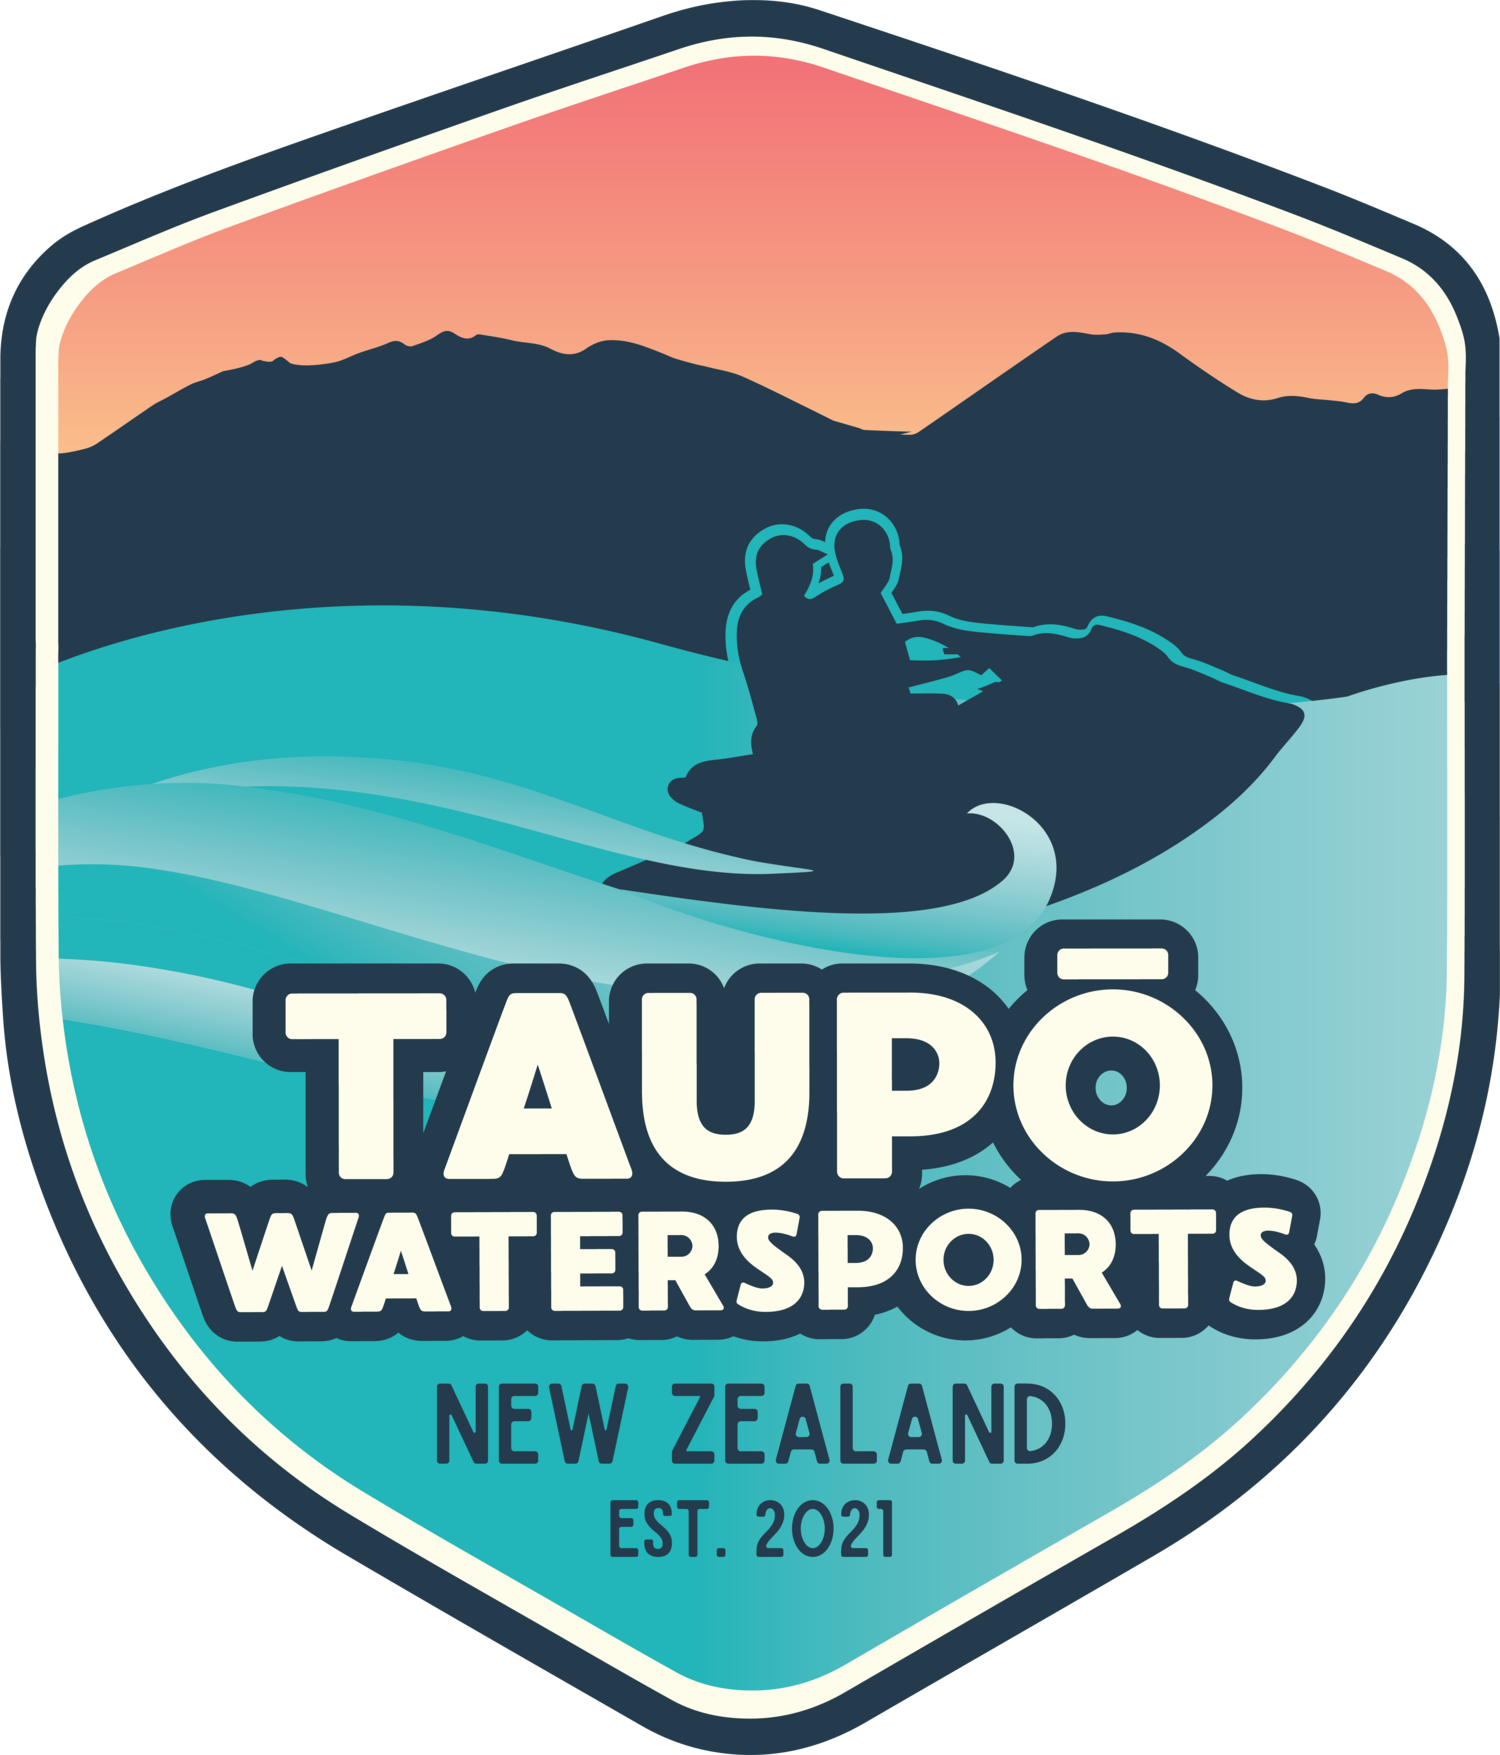 TAUPO WATERSPORTS